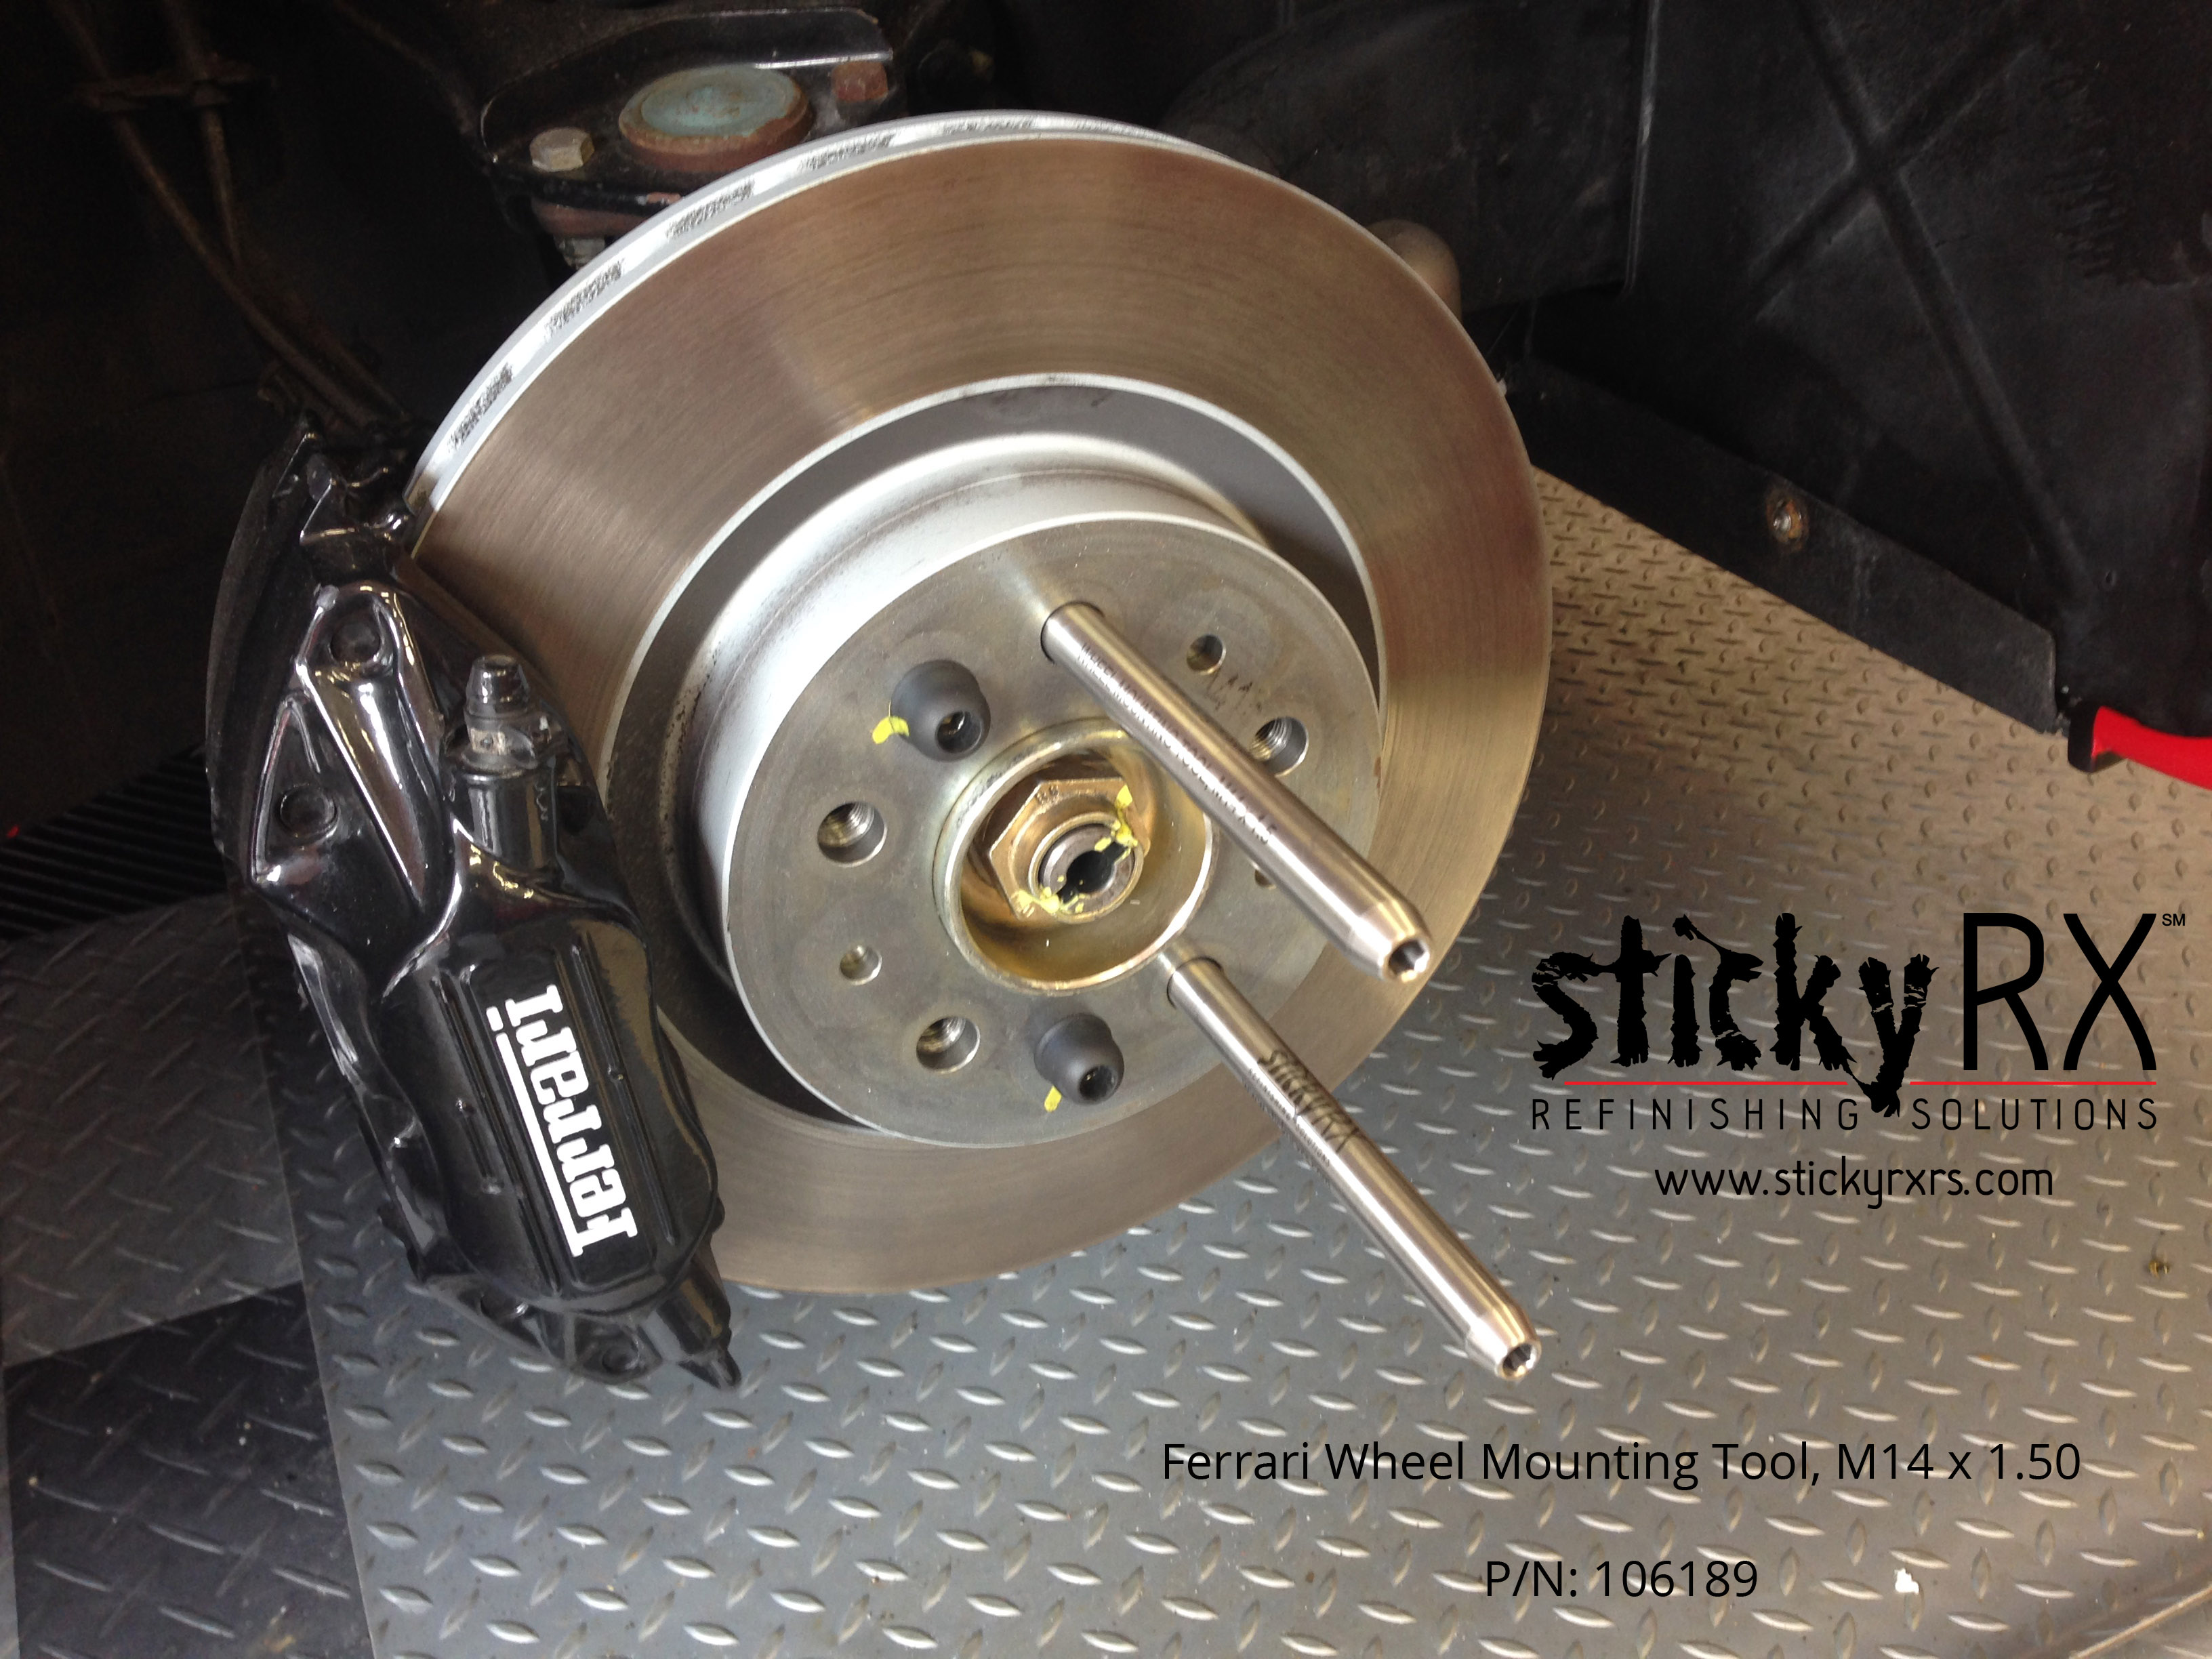 Sticky RX Refinishing Solutions Ferrari Wheel Mounting Tool 05